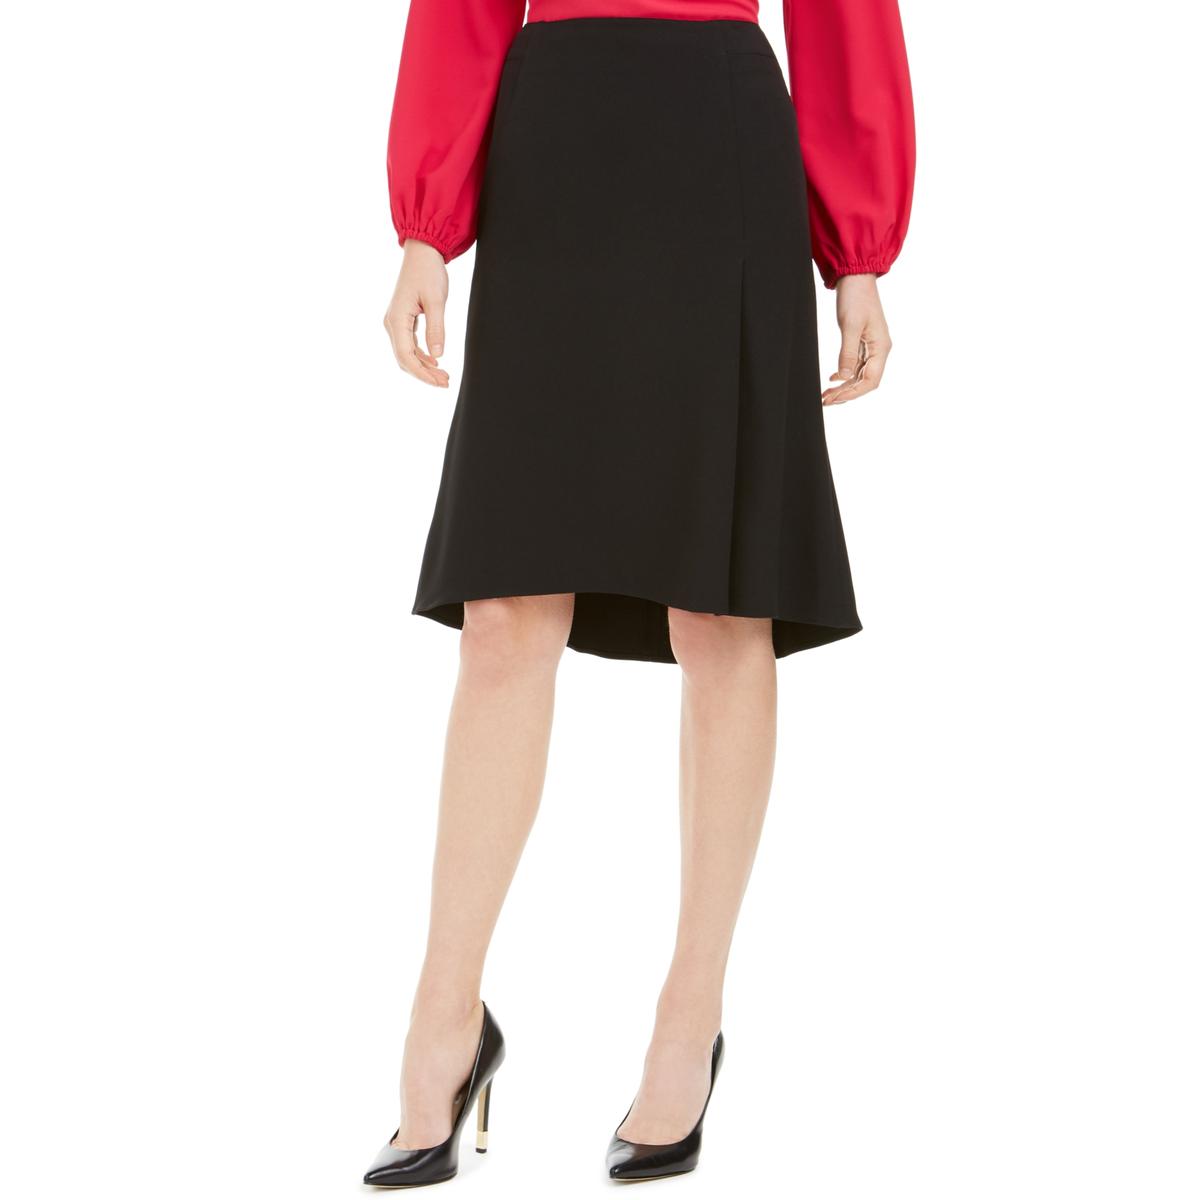 Kasper Womens Black Stretch Crepe Daytime Skirt Petites 2P BHFO 4962 | eBay